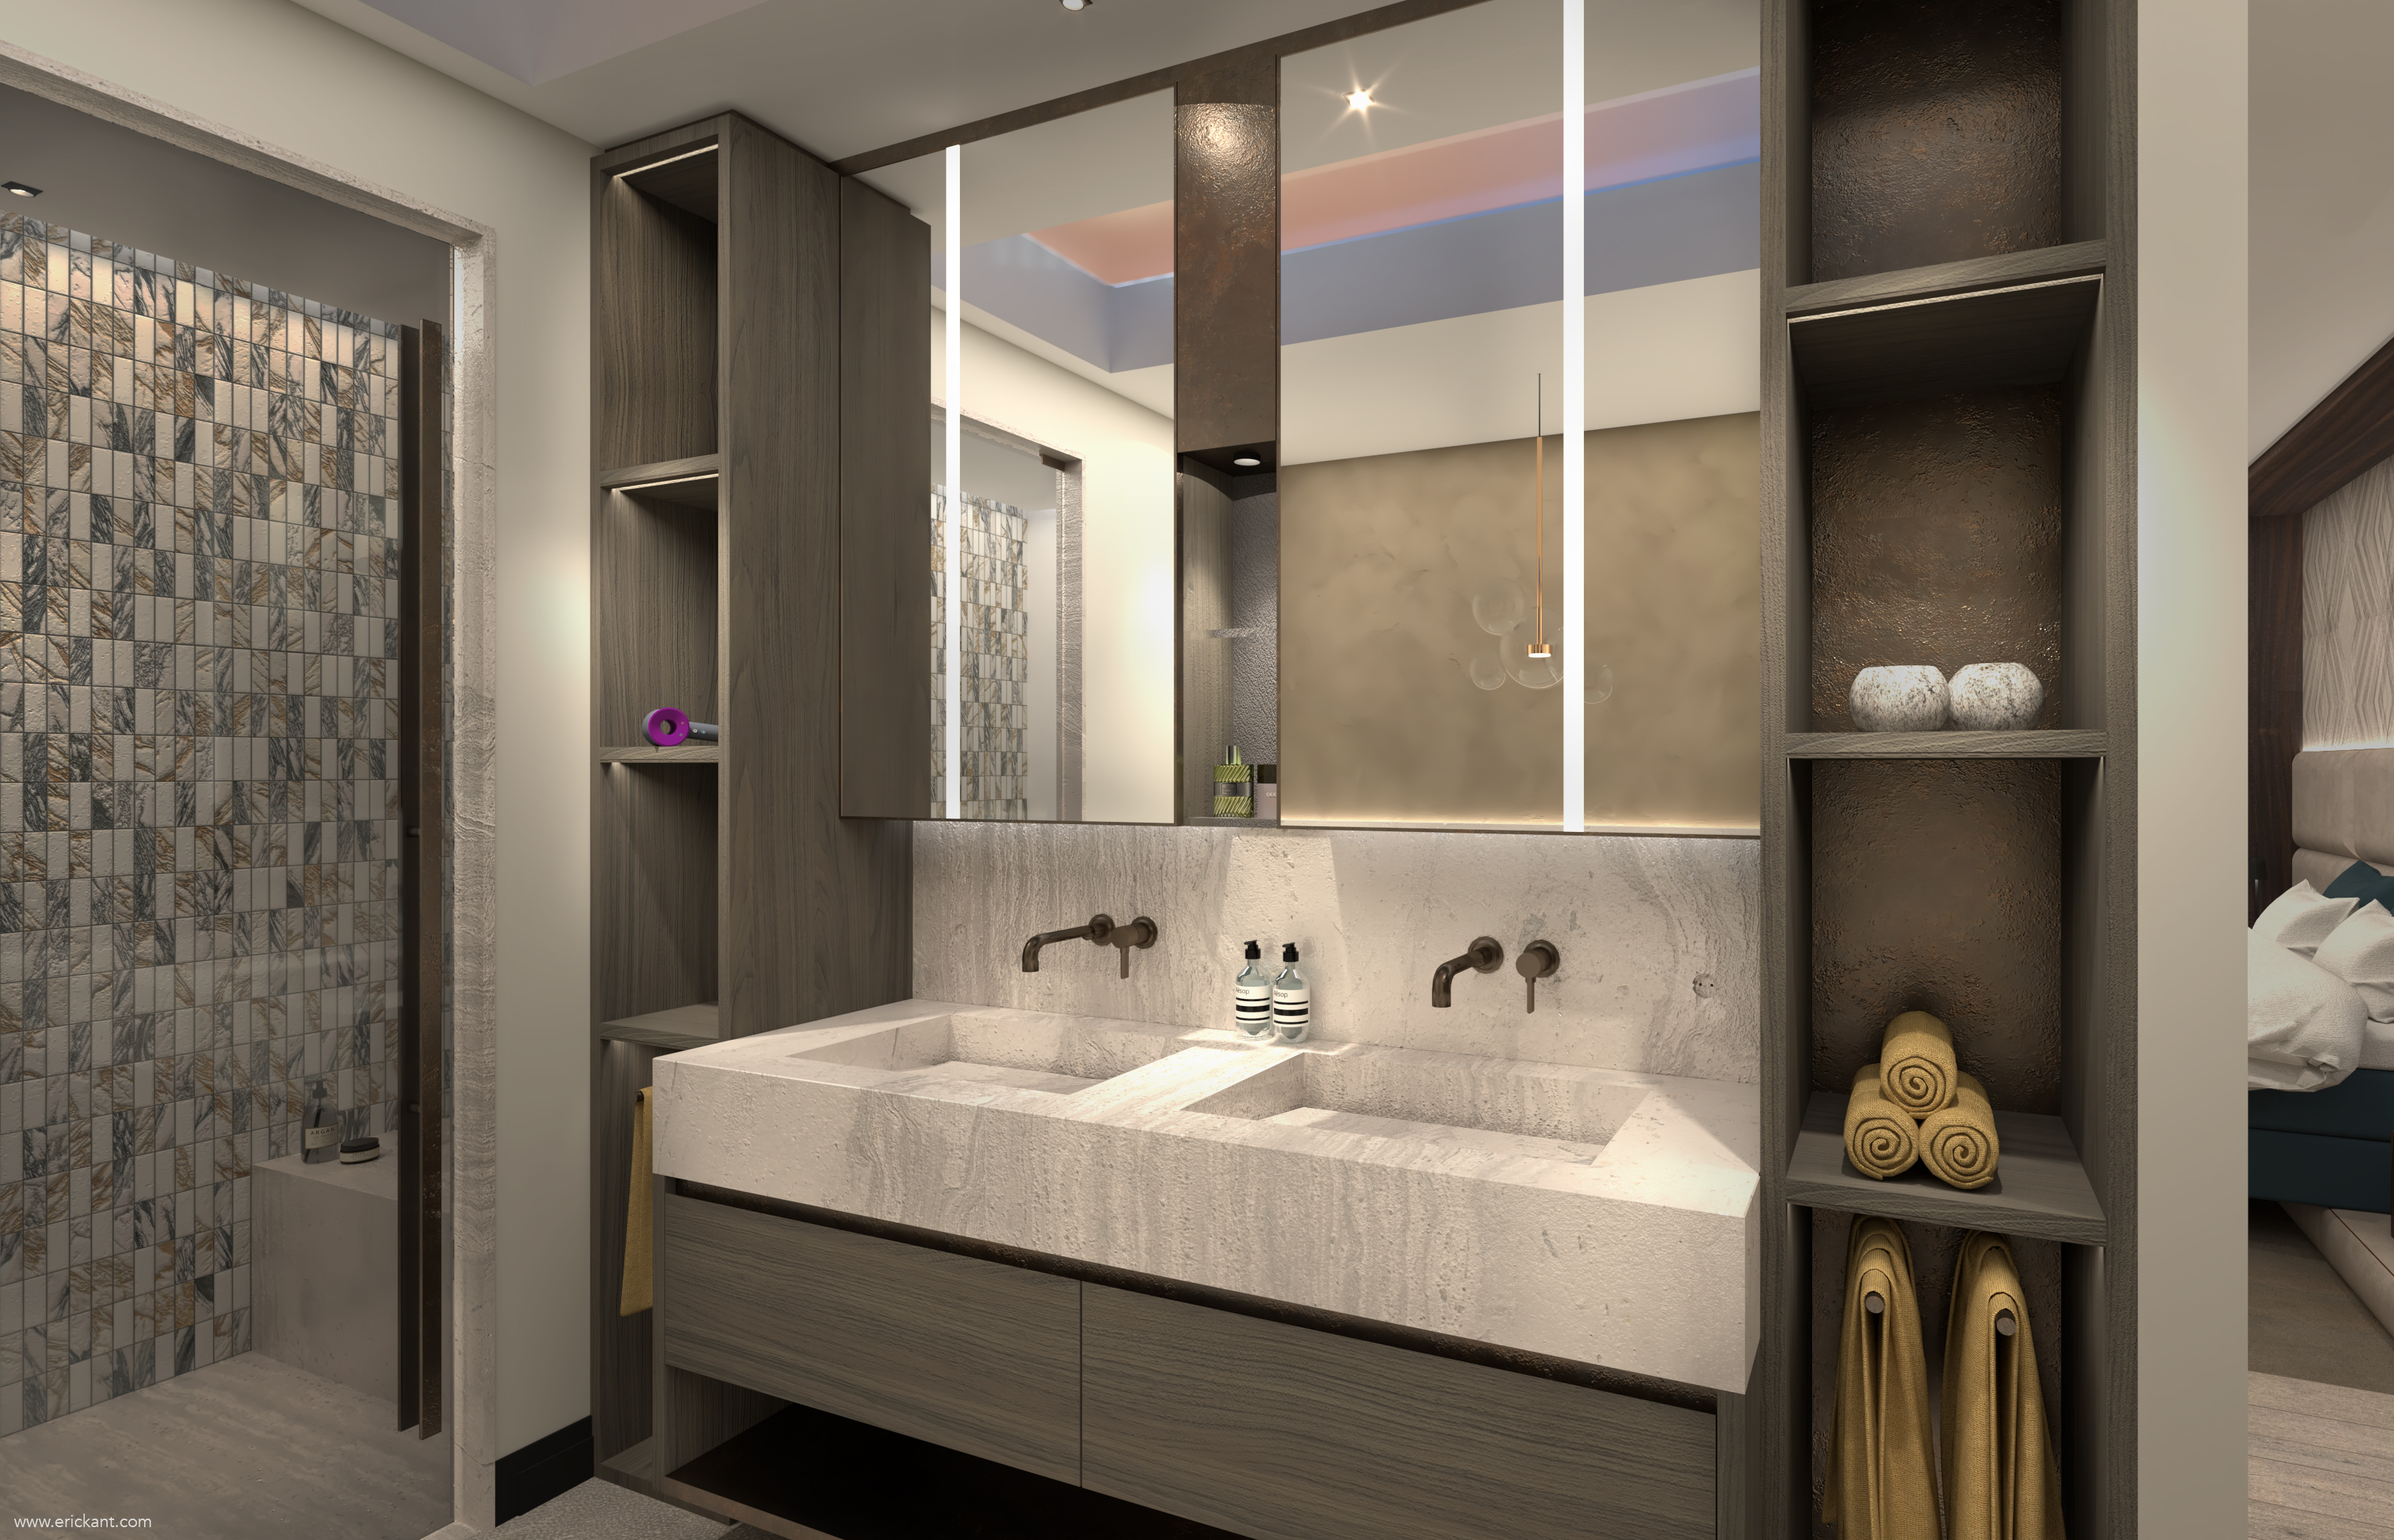 Penthouse-master-bathroom-Design-Eric-Kant.jpg